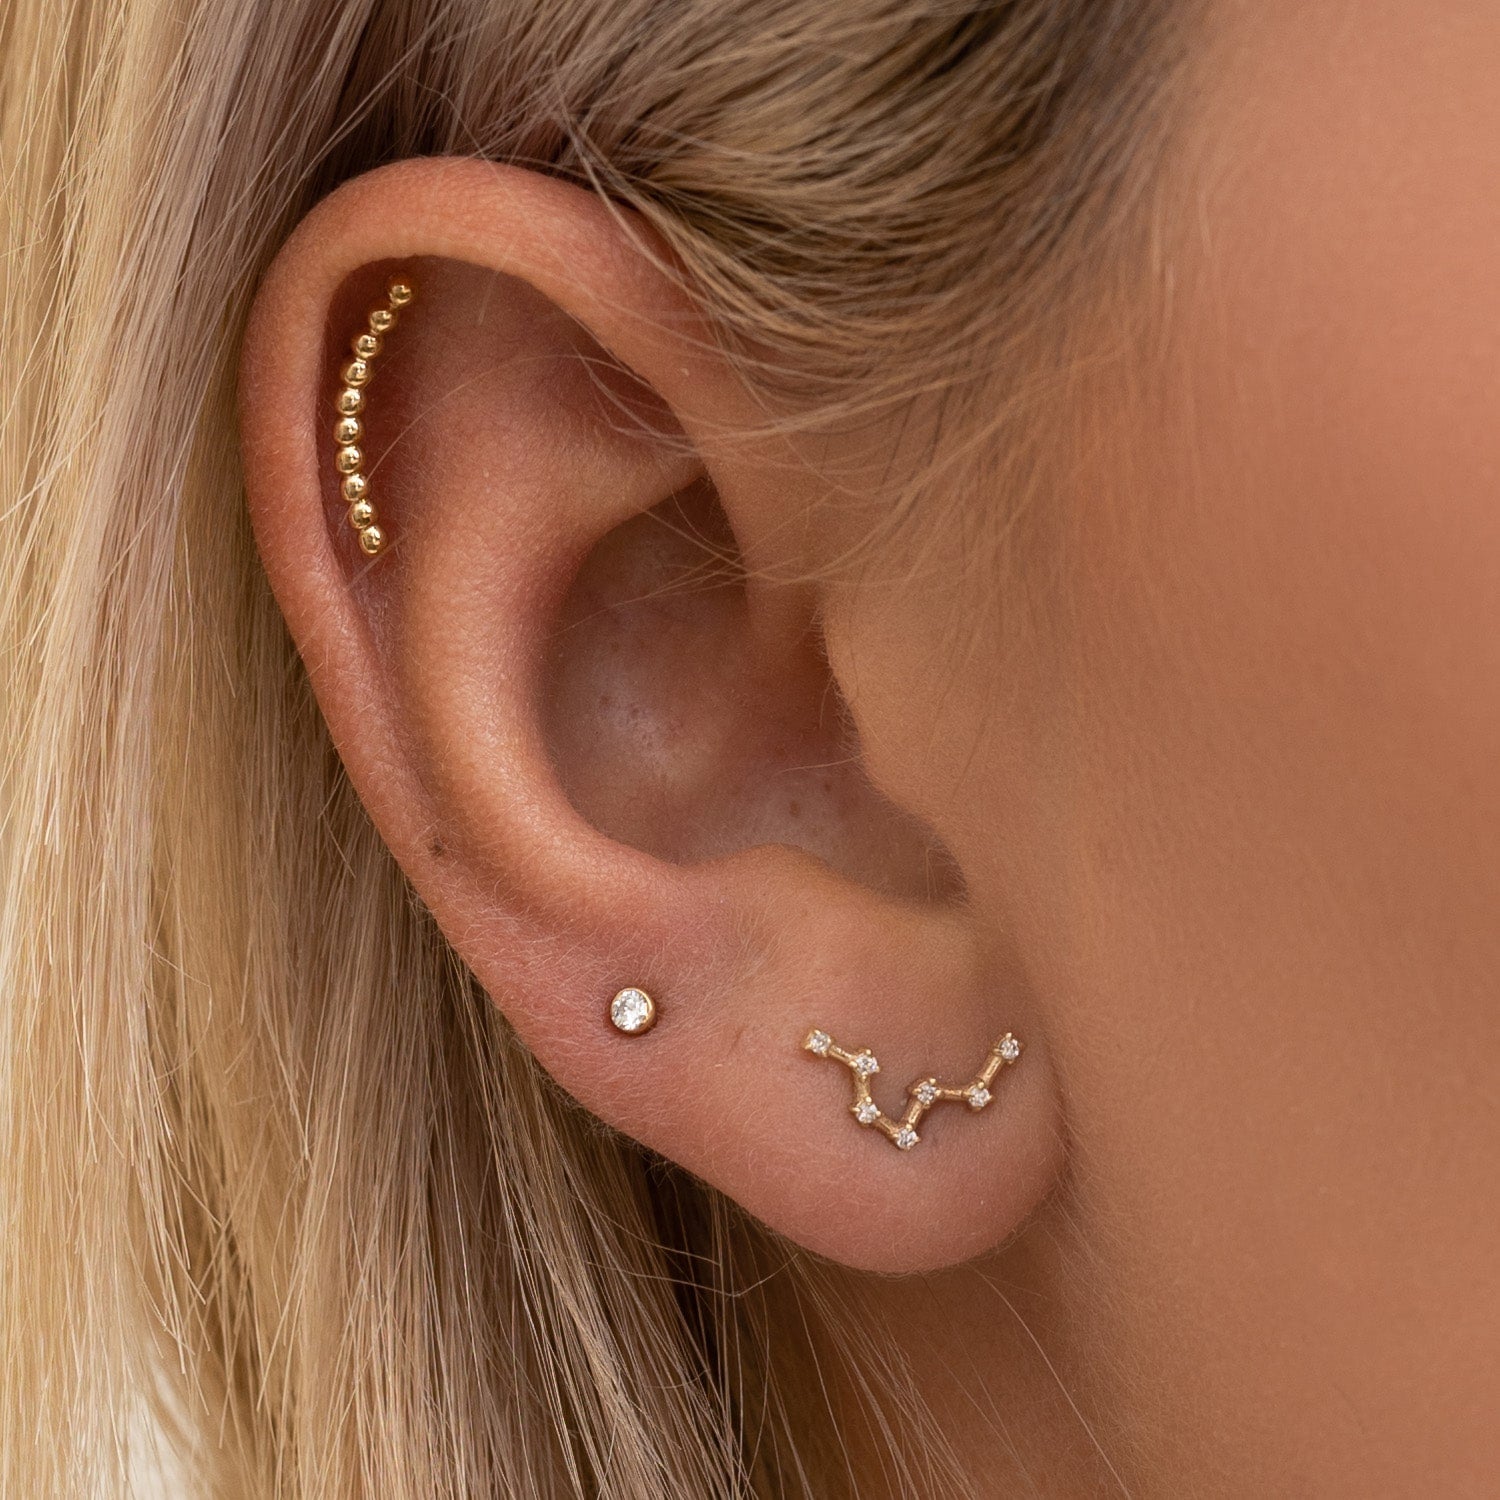 2.5mm Diamond Low-Set 14k Gold Cartilage Earring